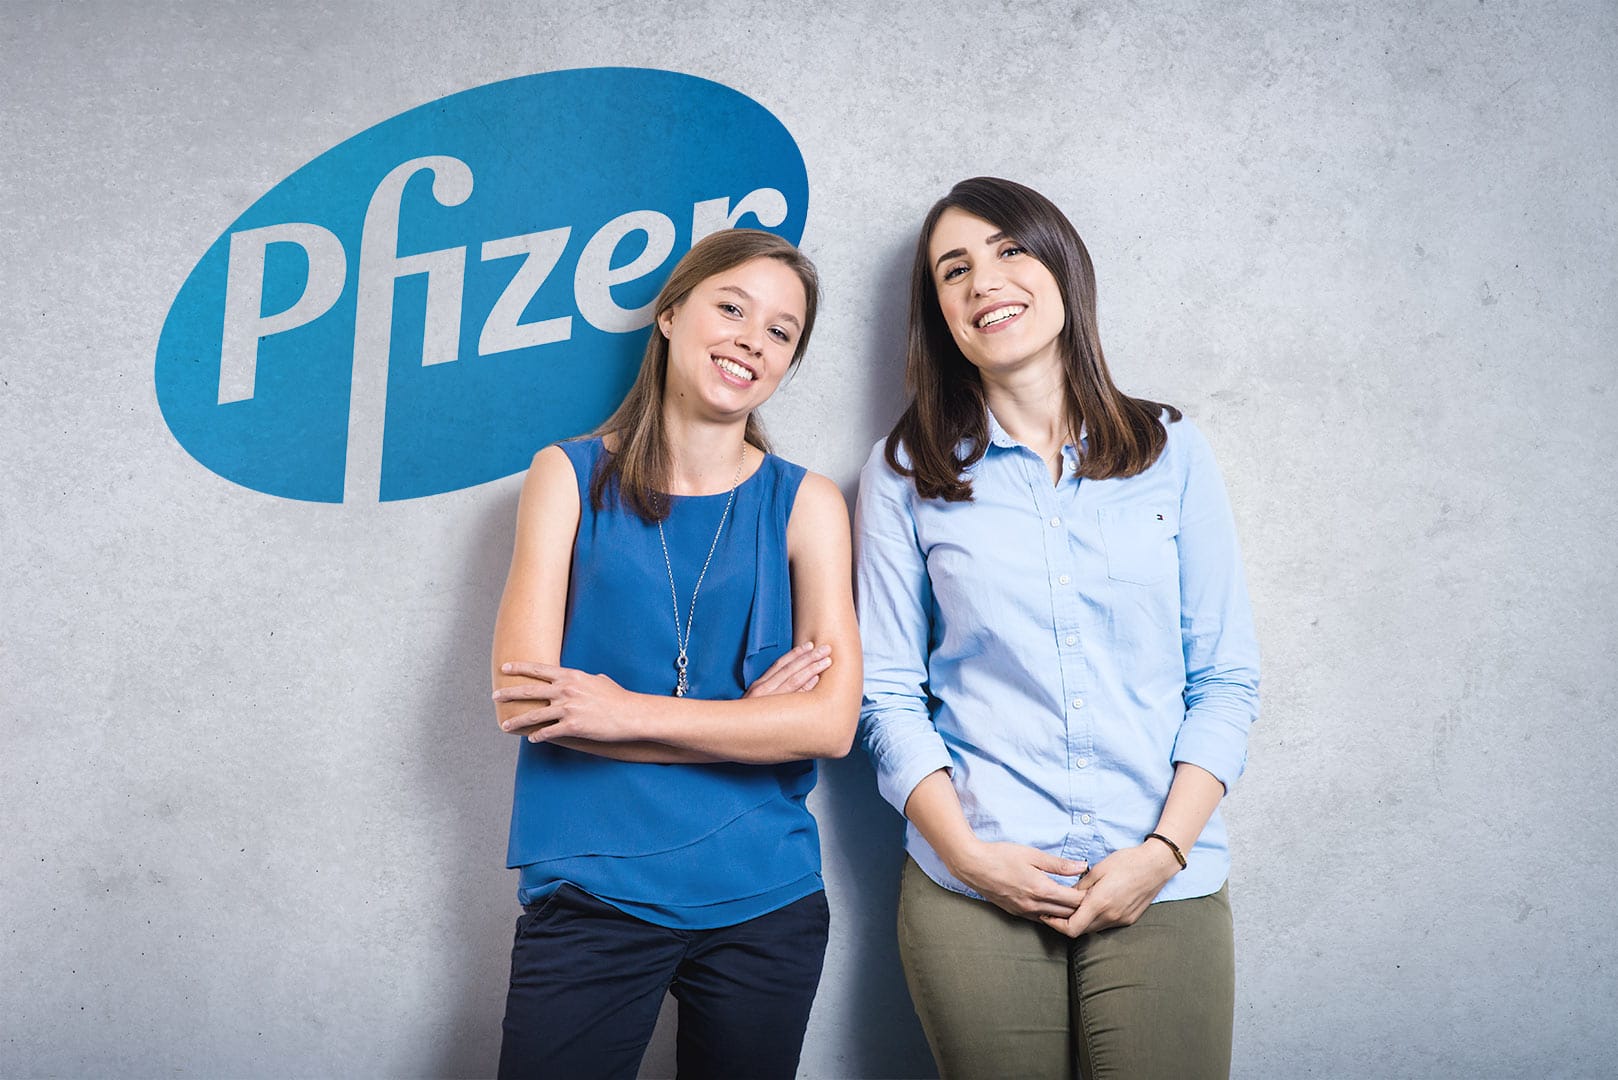 Pfizer-Germany-Employer-Branding-Human-Resources-Campaign-Portraits-03.jpg